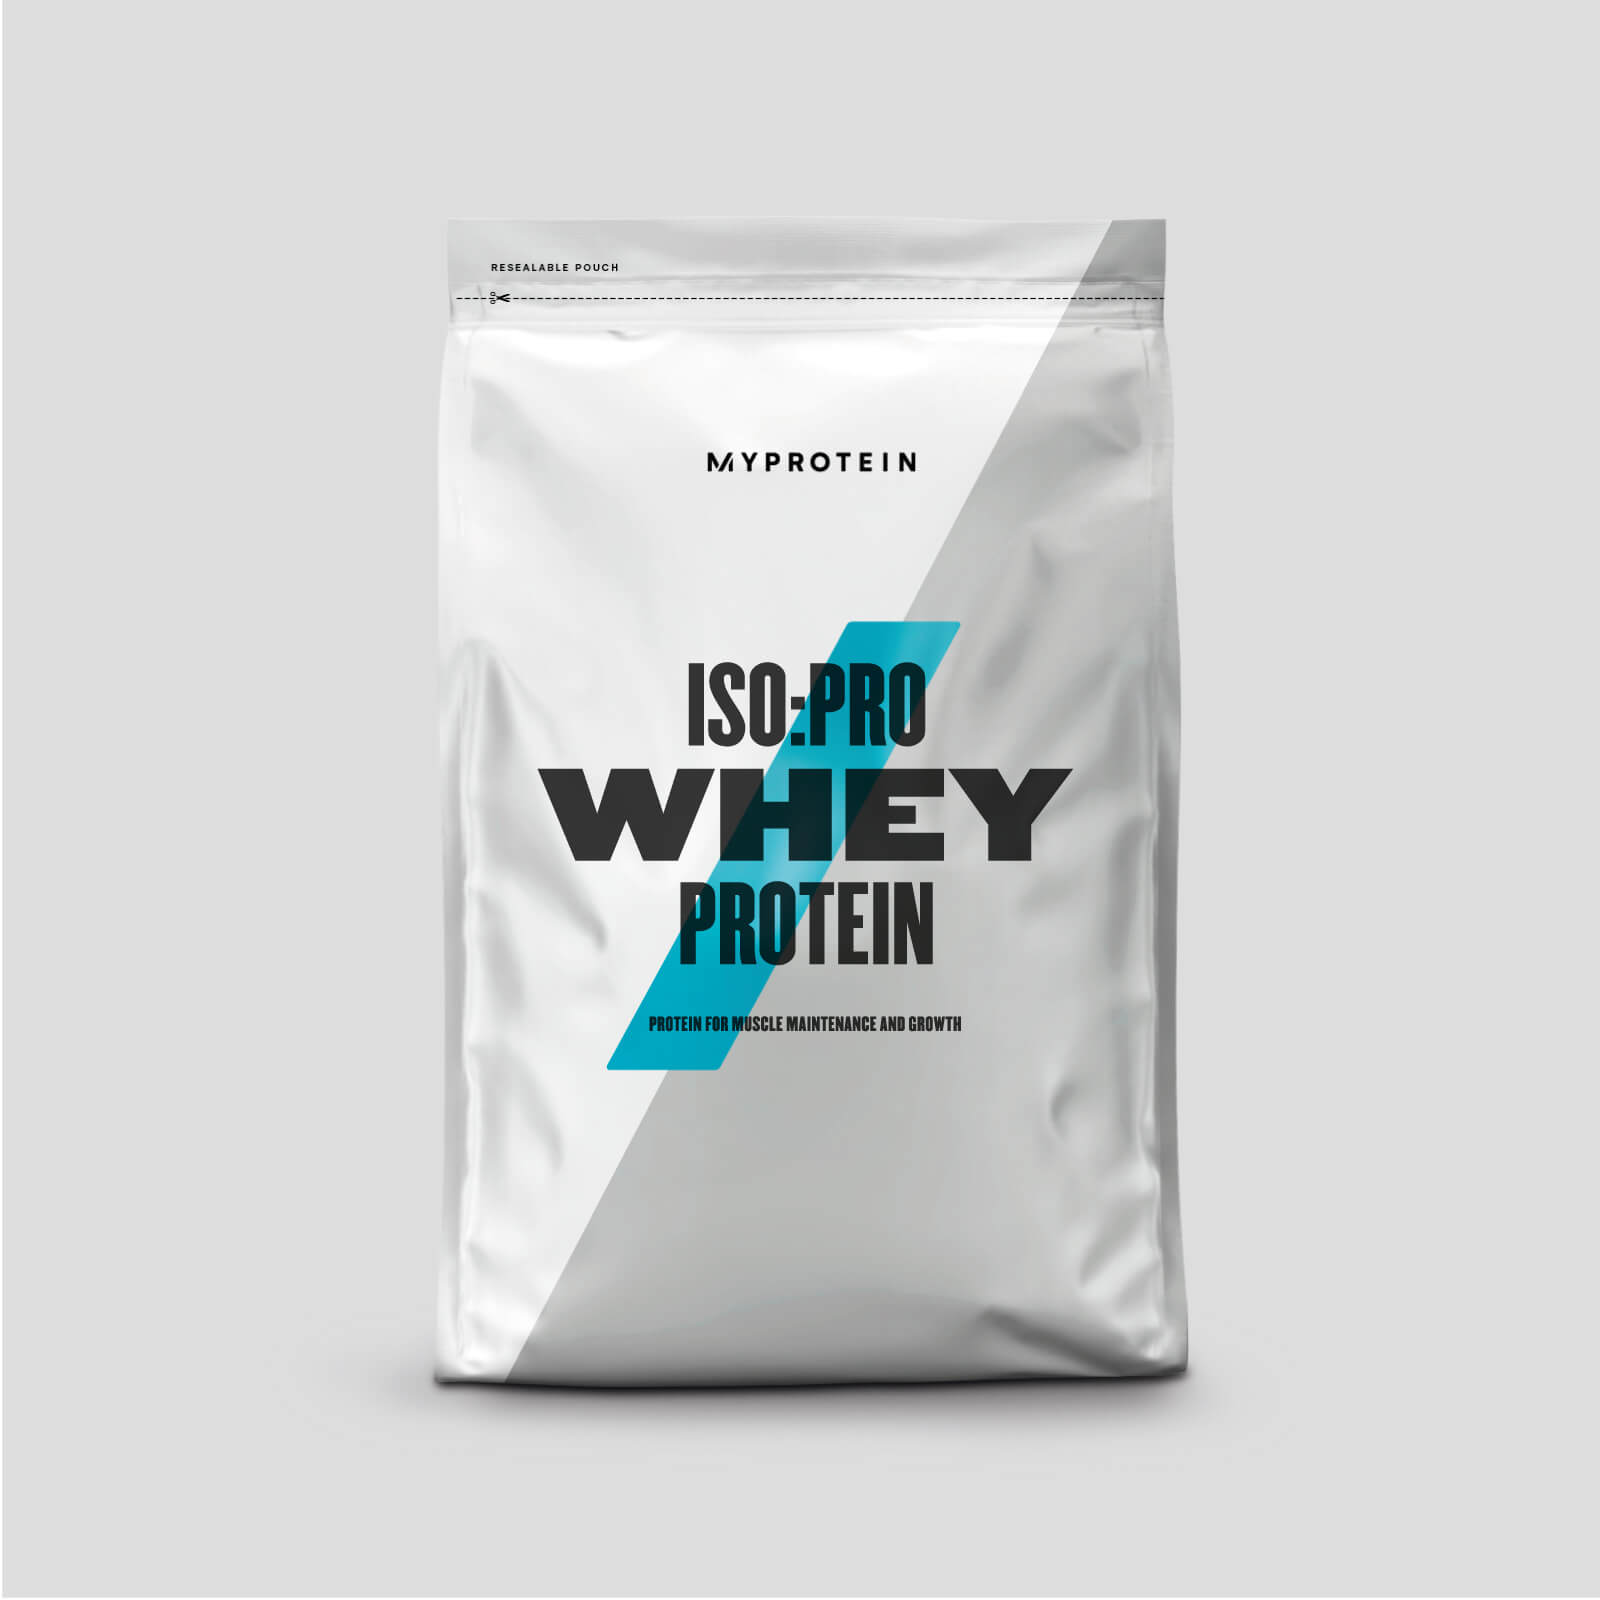 Iso:Pro Whey Protein - 1kg - Dâu tây